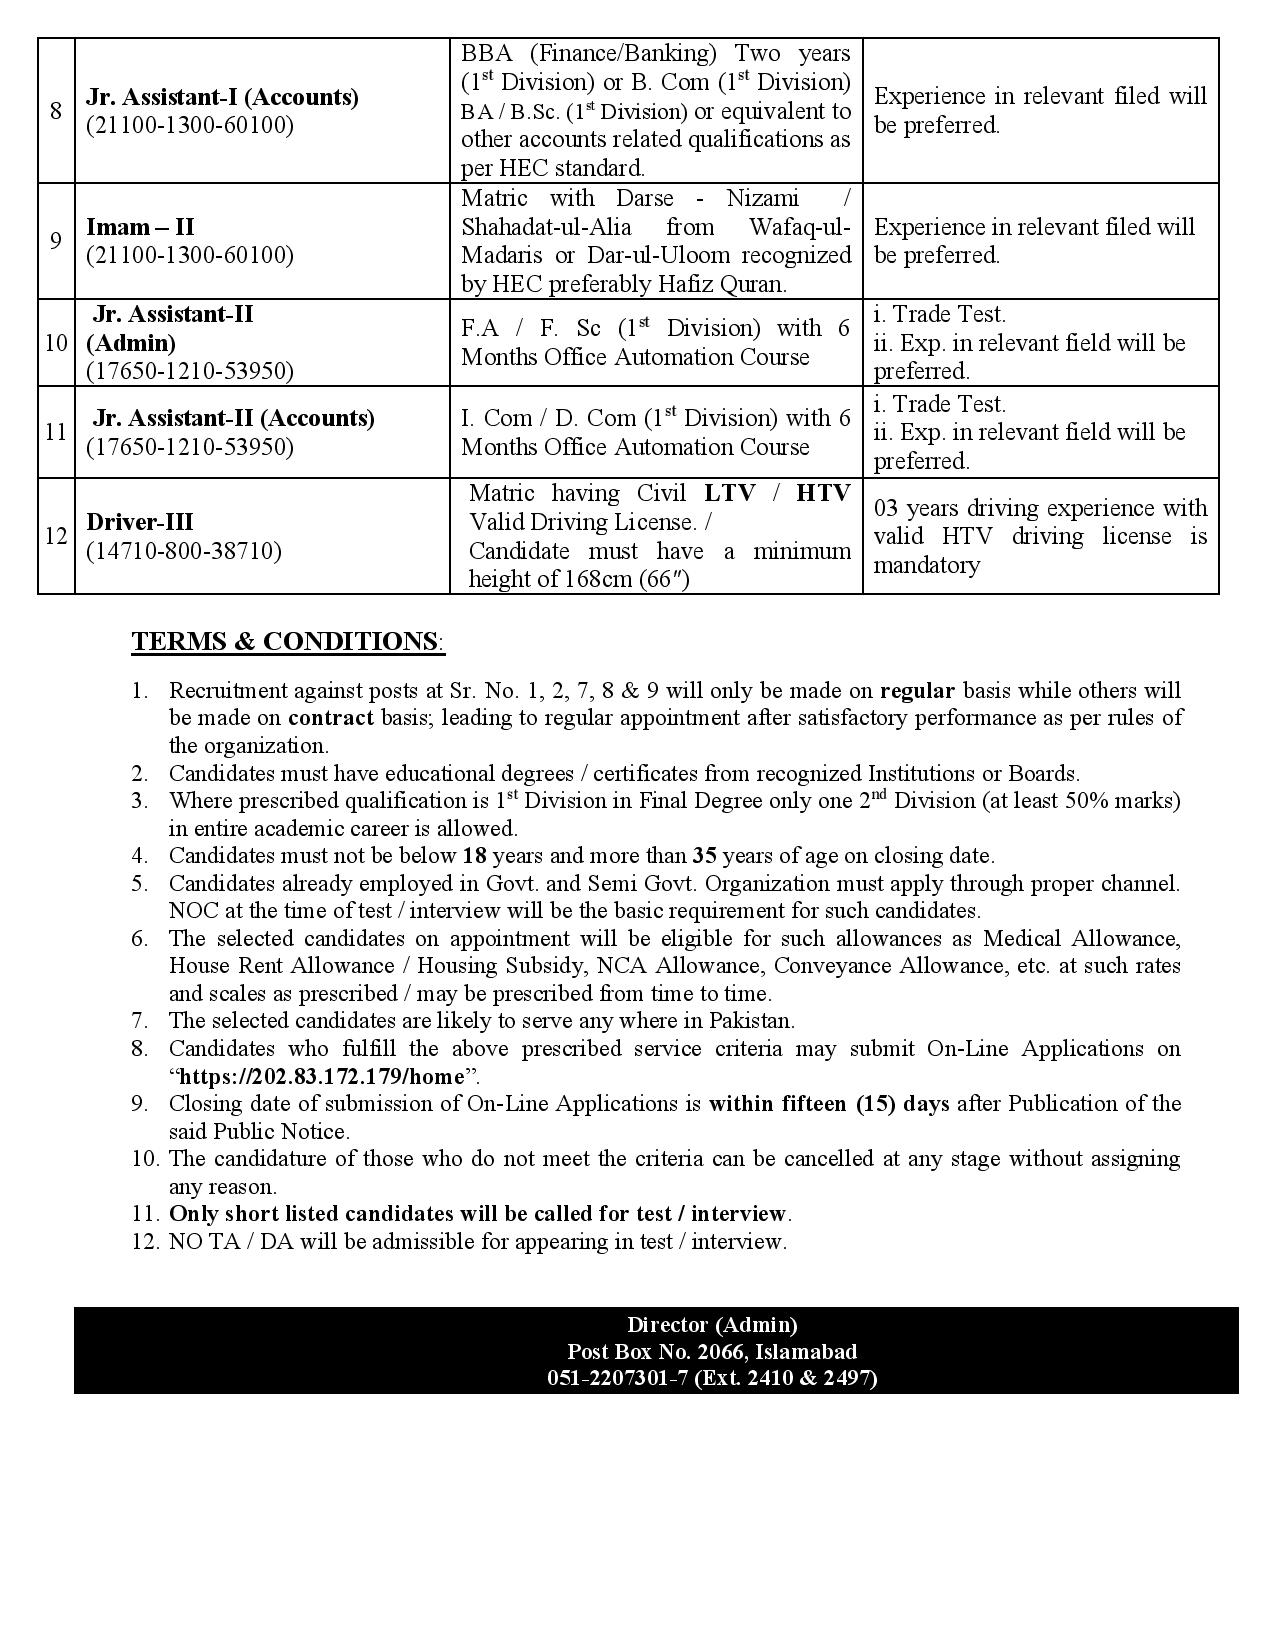 PAEC Jobs 2021-Pakistan Atomic Energy Commission | Apply Online